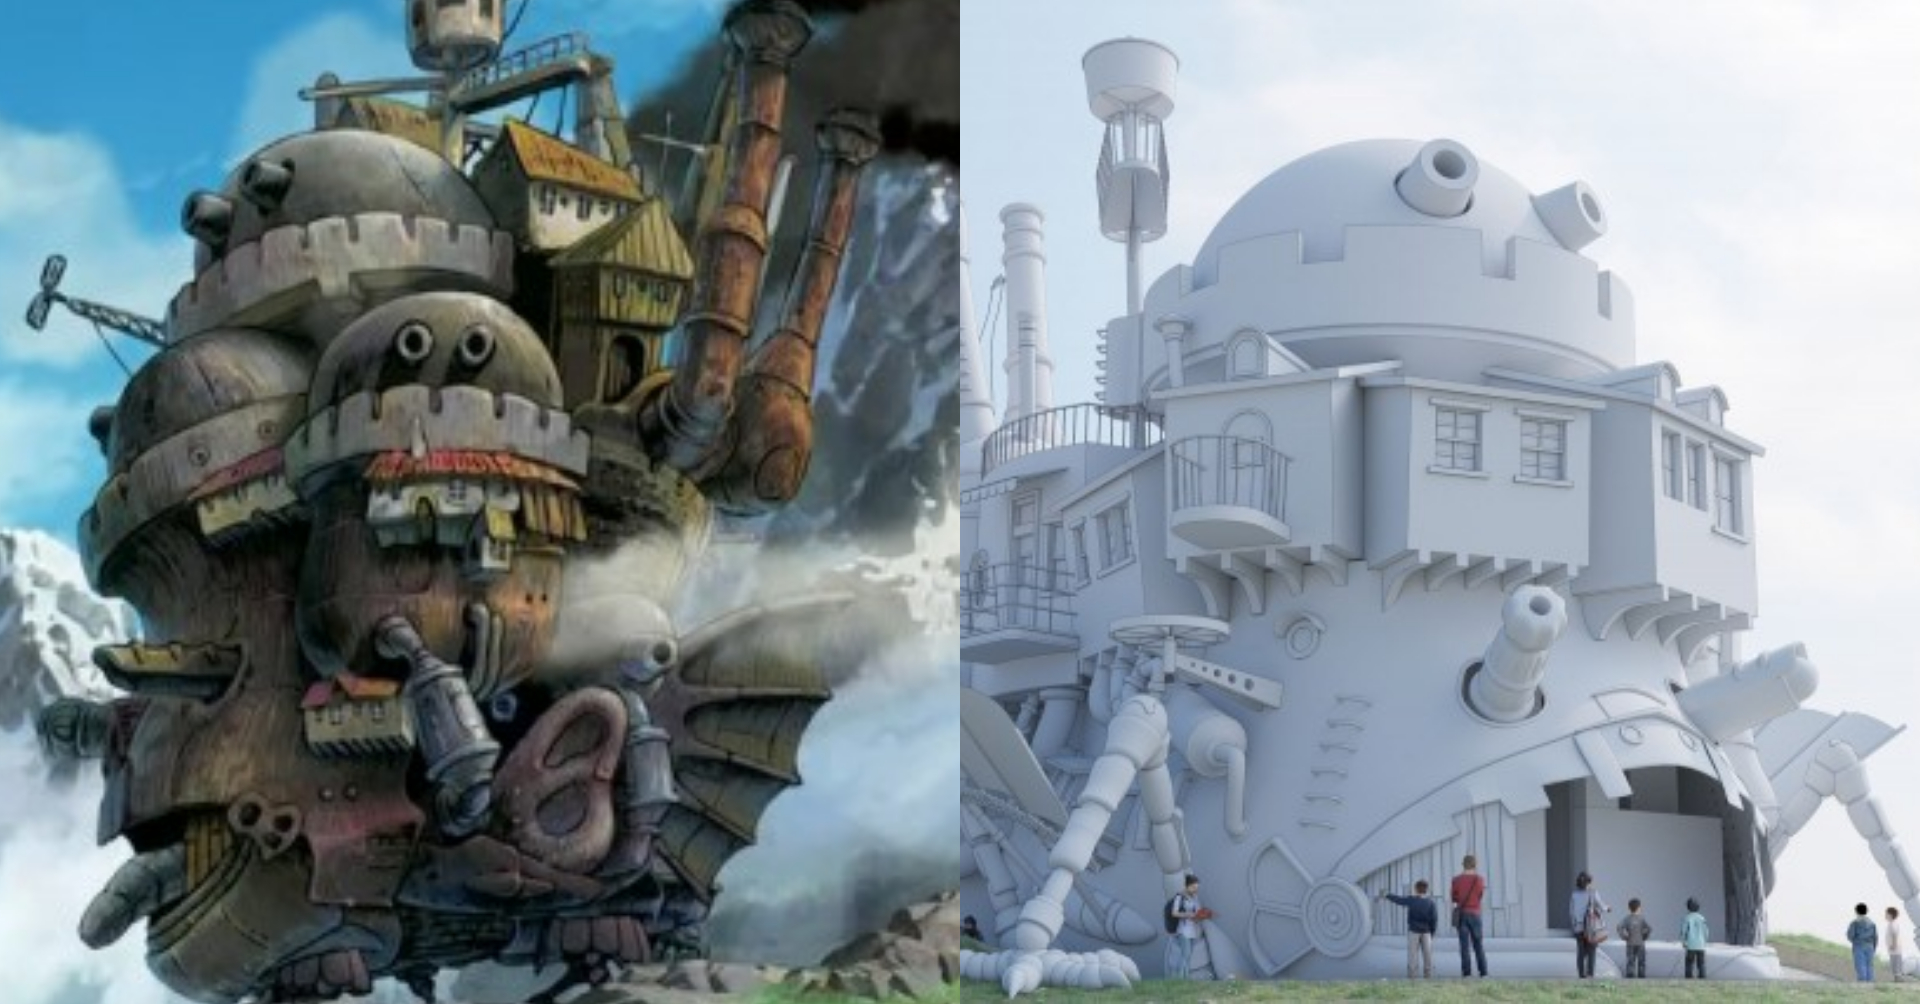 Ghibli Theme Park Howl's Moving Castle